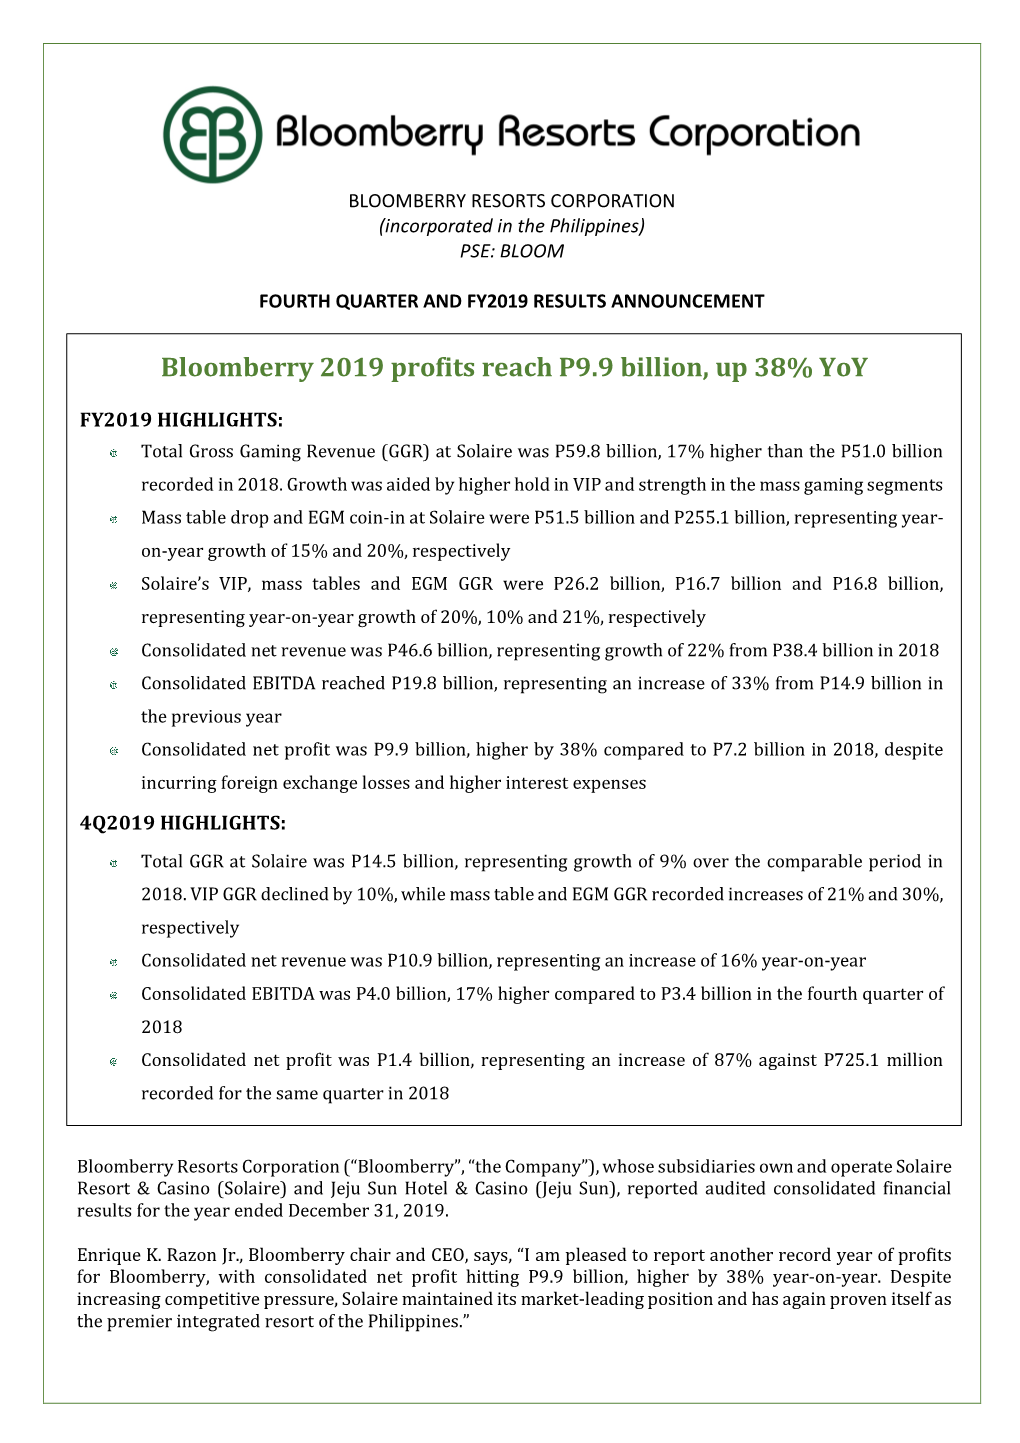 Bloomberry 2019 Profits Reach P9.9 Billion, up 38% Yoy